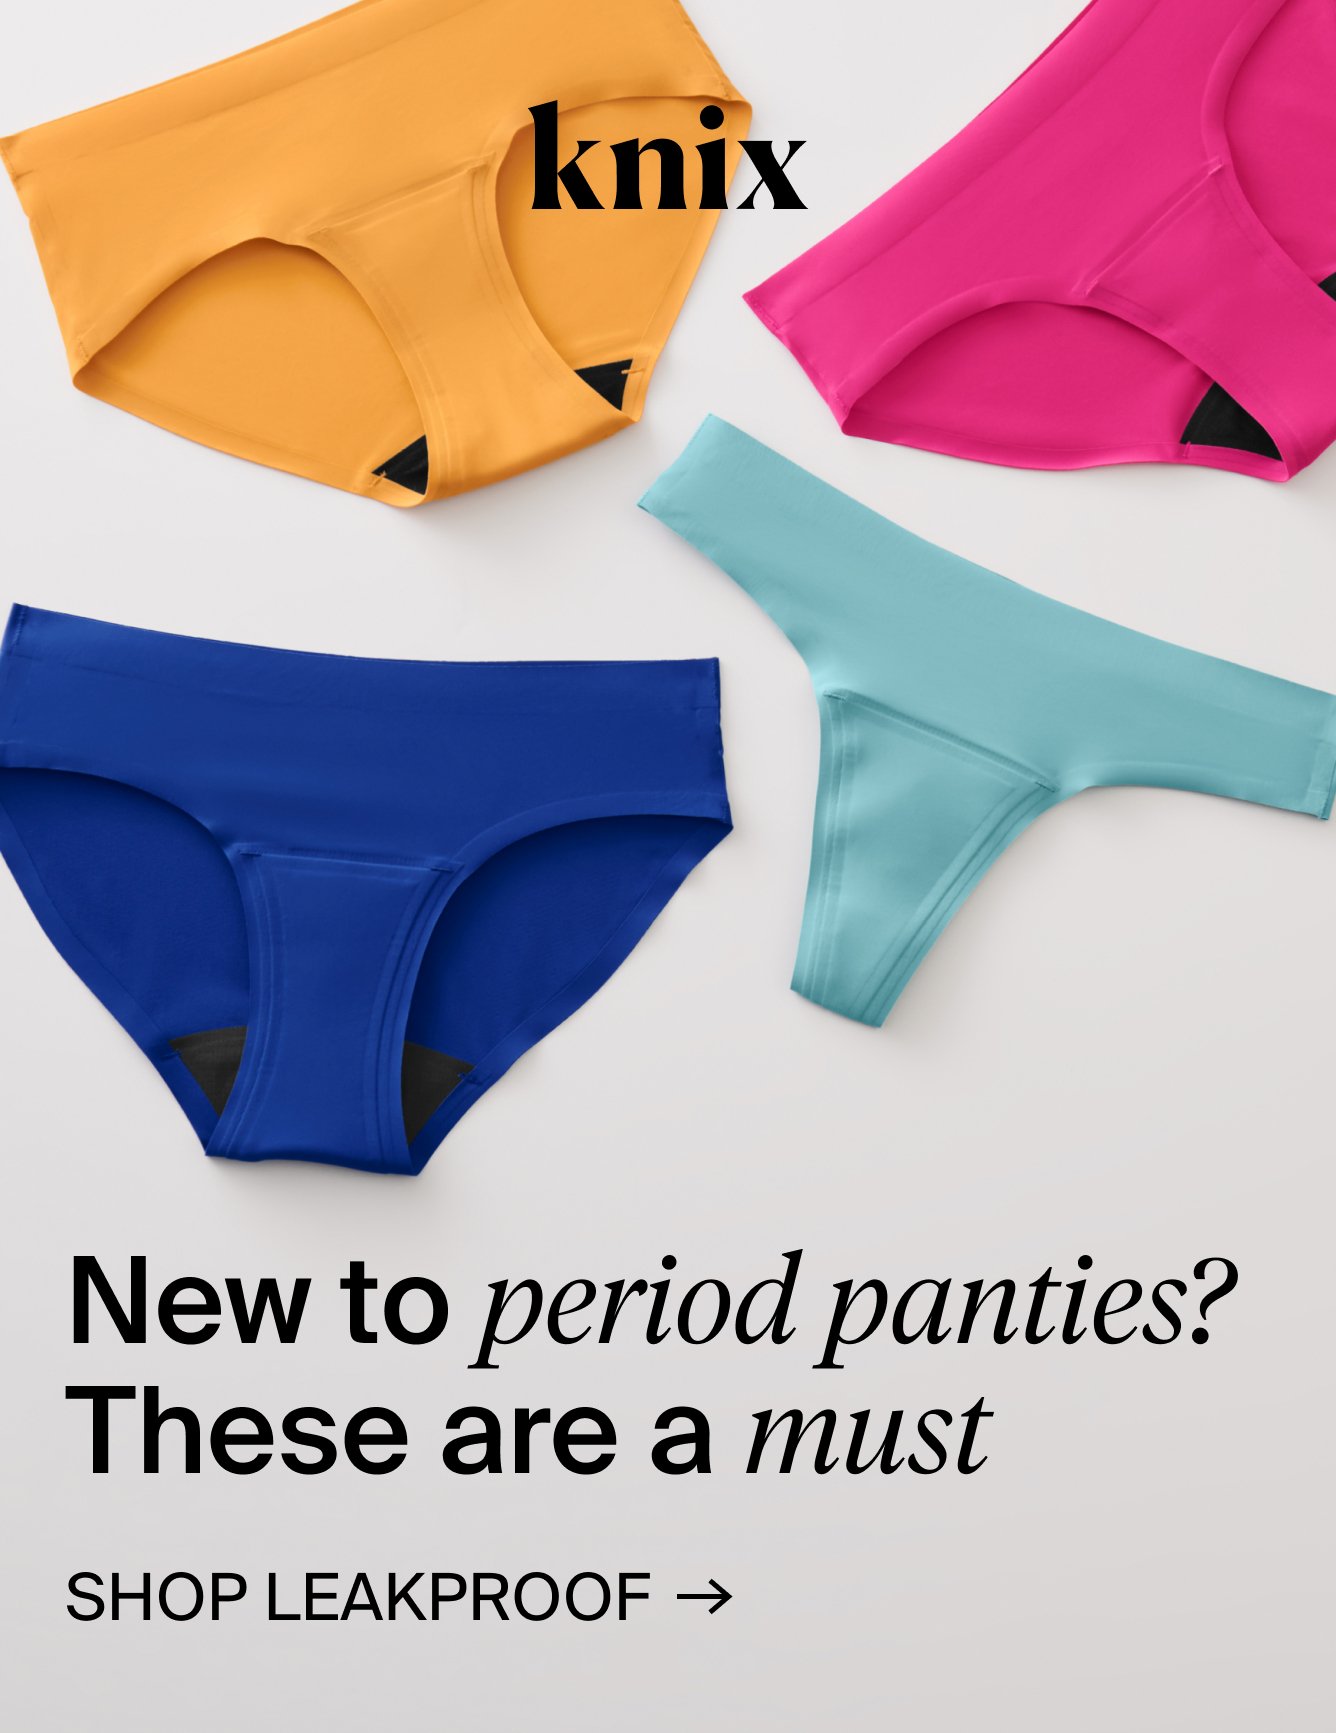 Knix Leakproof Period Underwear Is *Always* Worth It